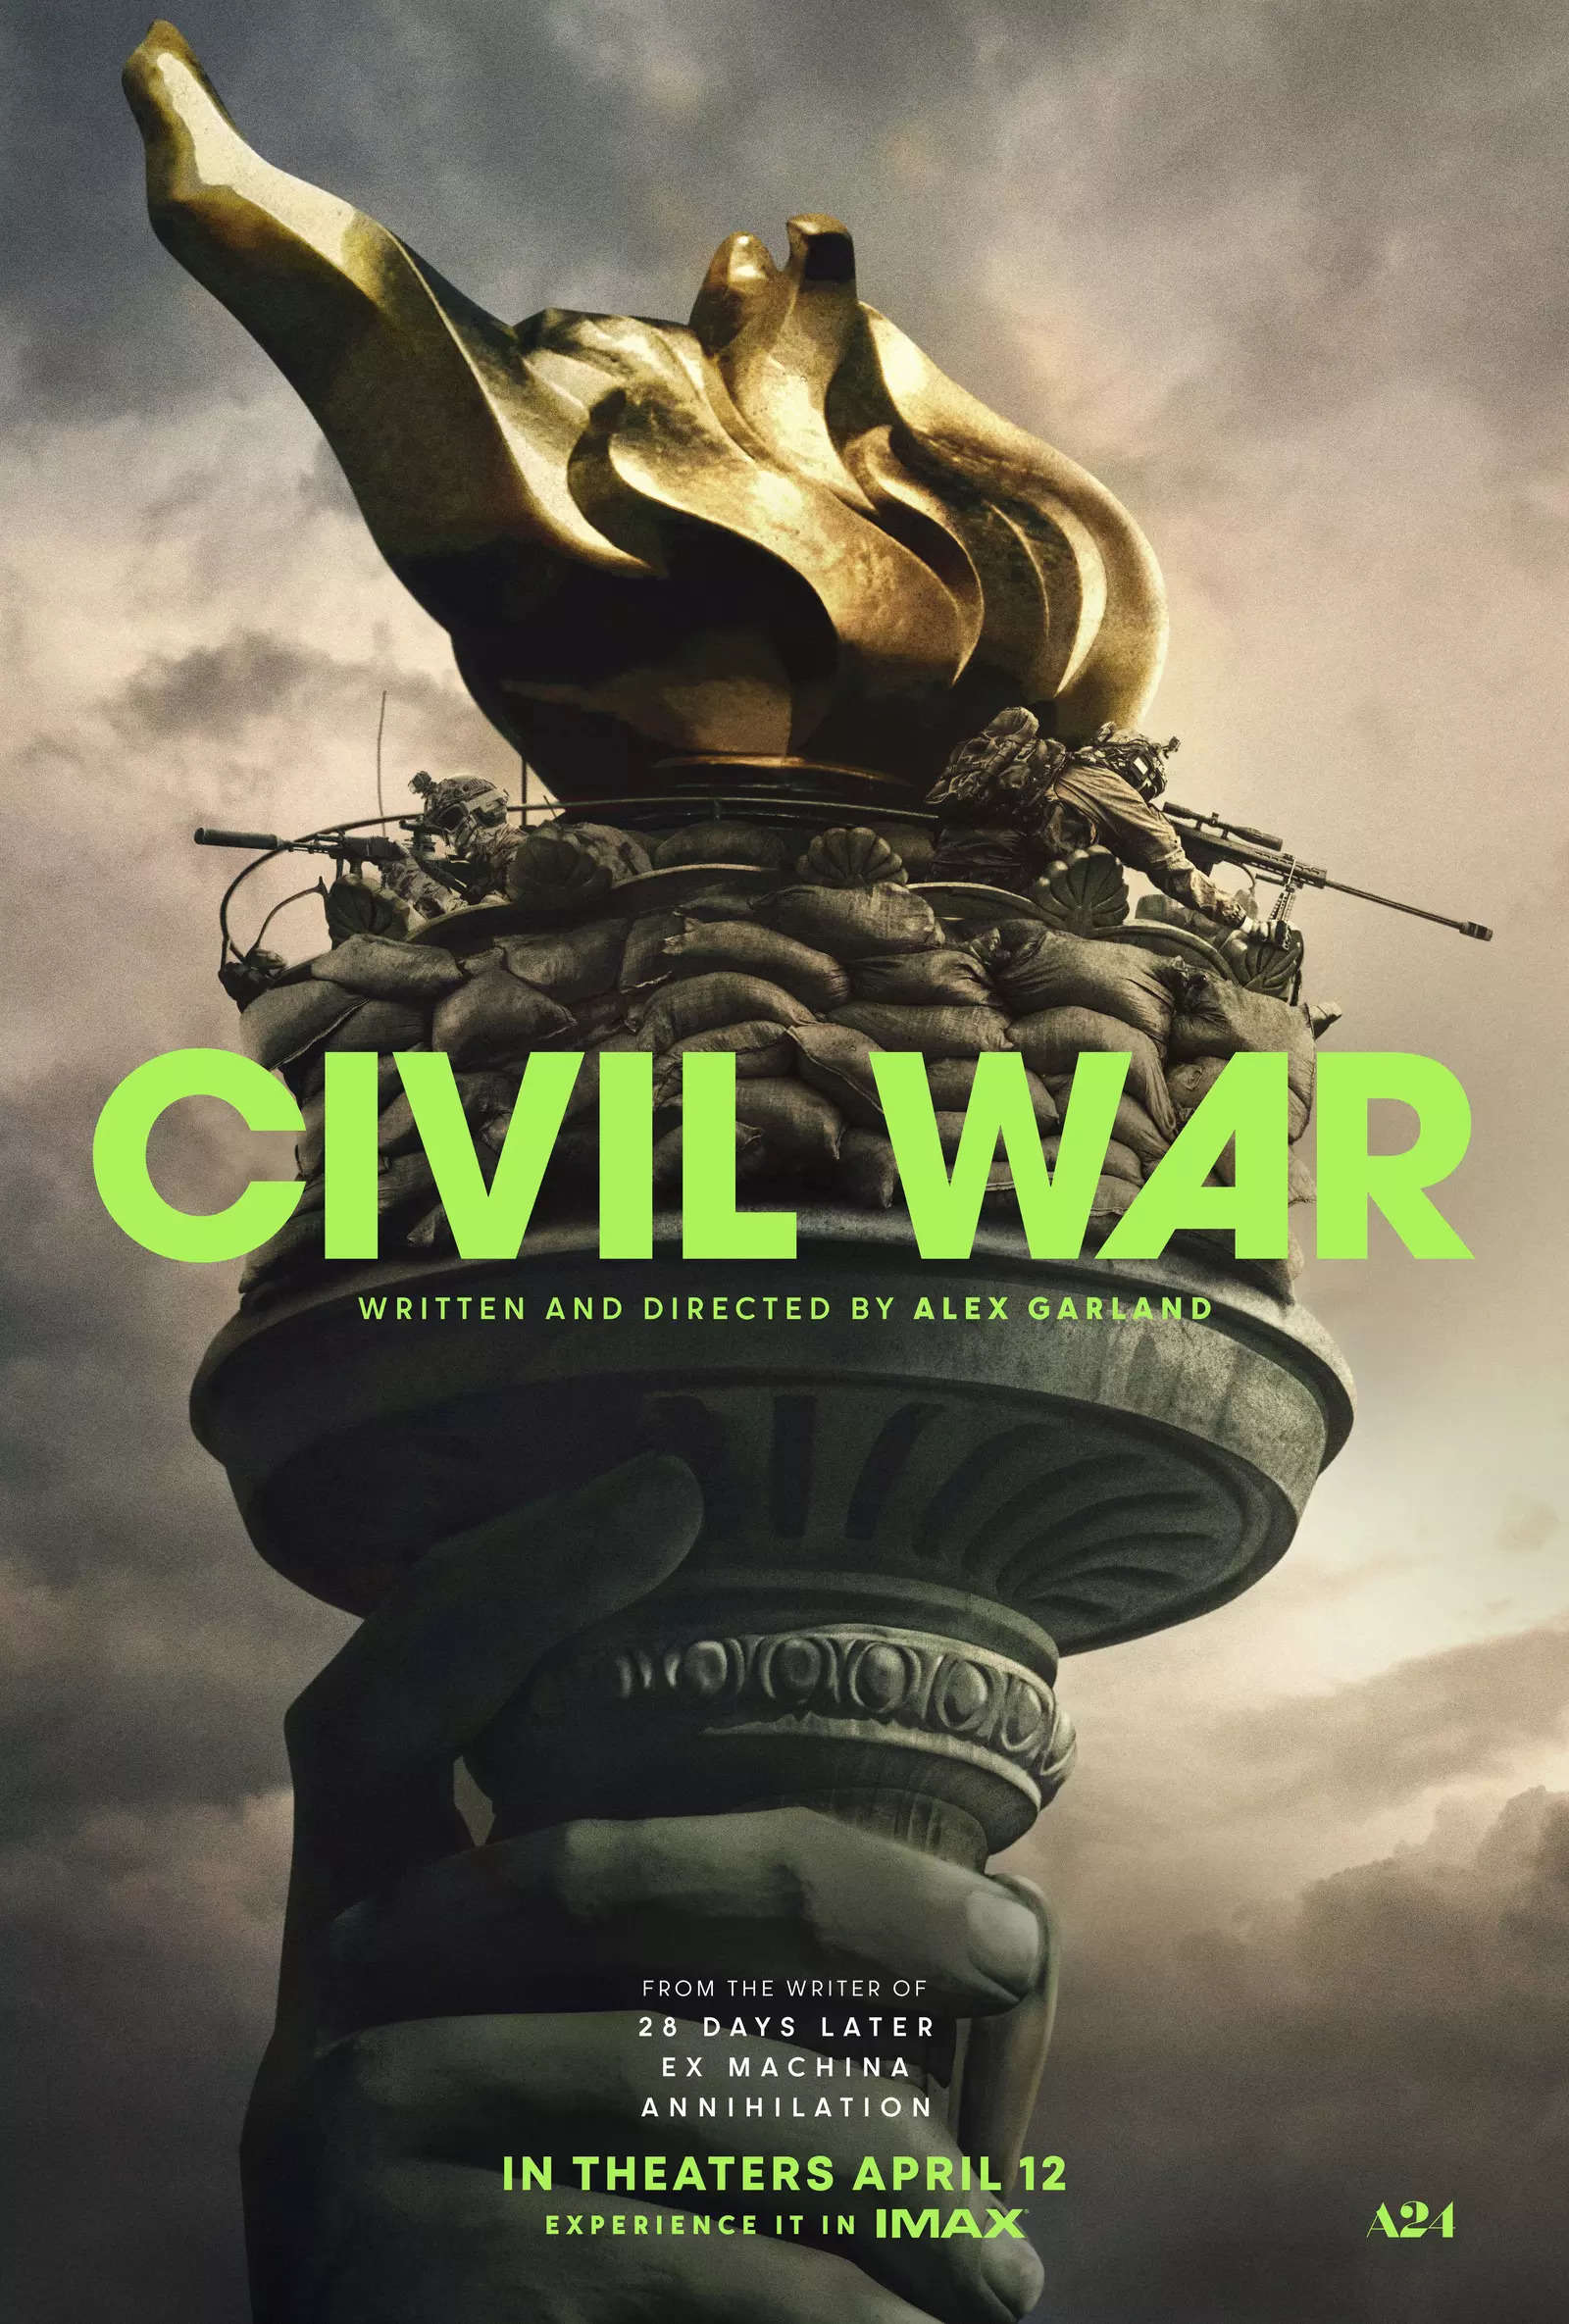 Civil War movie digital release date announced: Where to watch full movie online? 